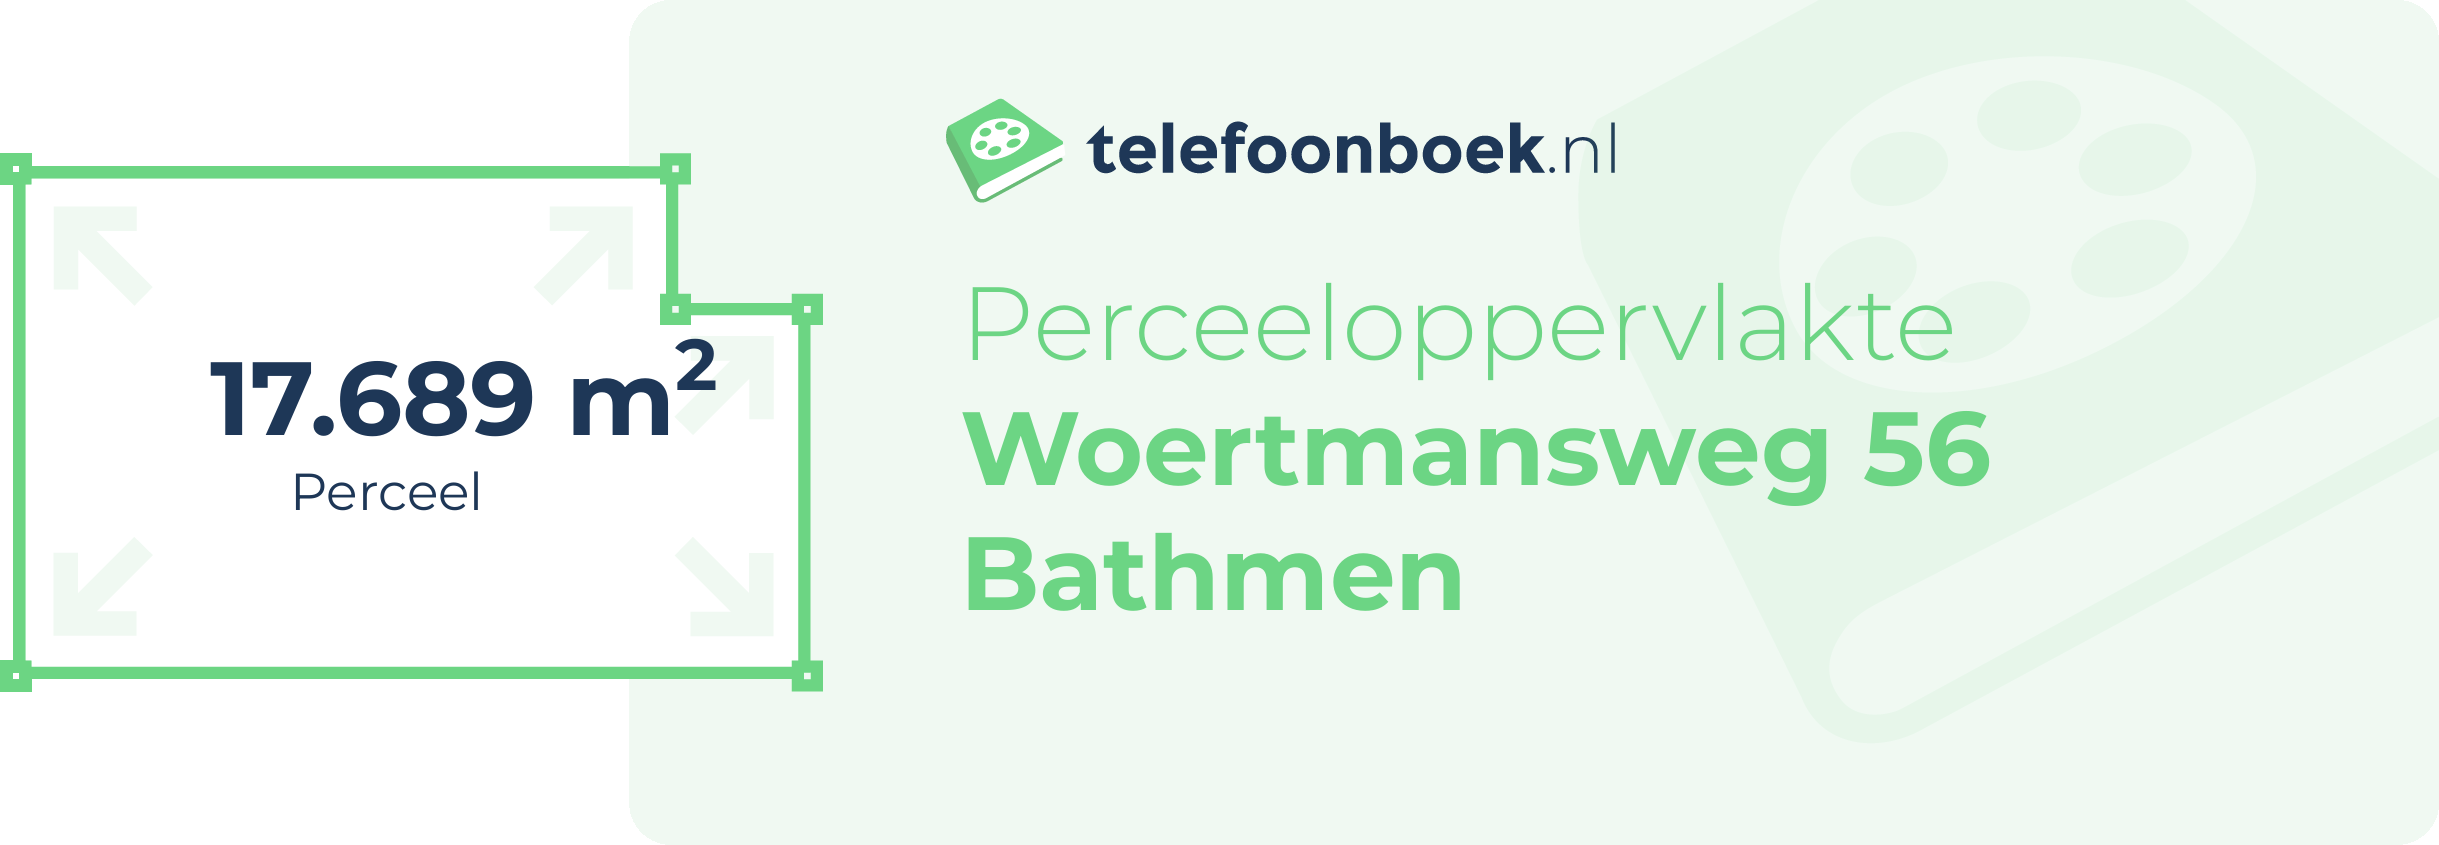 Perceeloppervlakte Woertmansweg 56 Bathmen